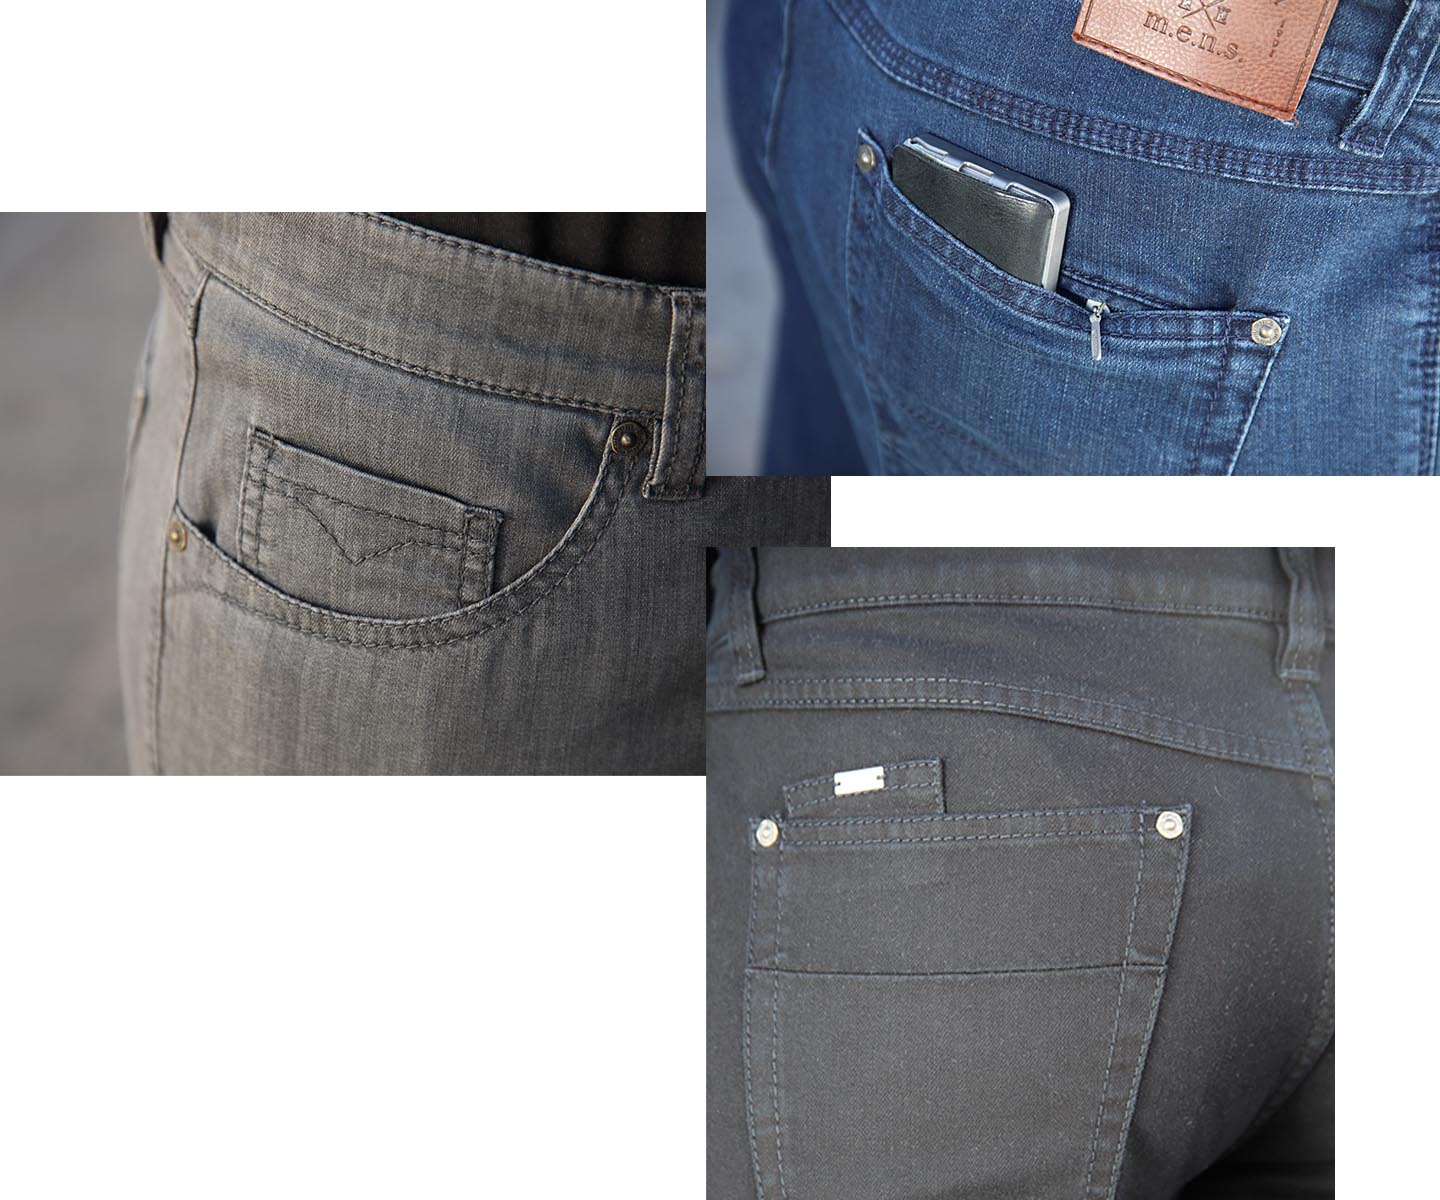 m.e.n.s. Casual Denim Jeans FS22 - Details